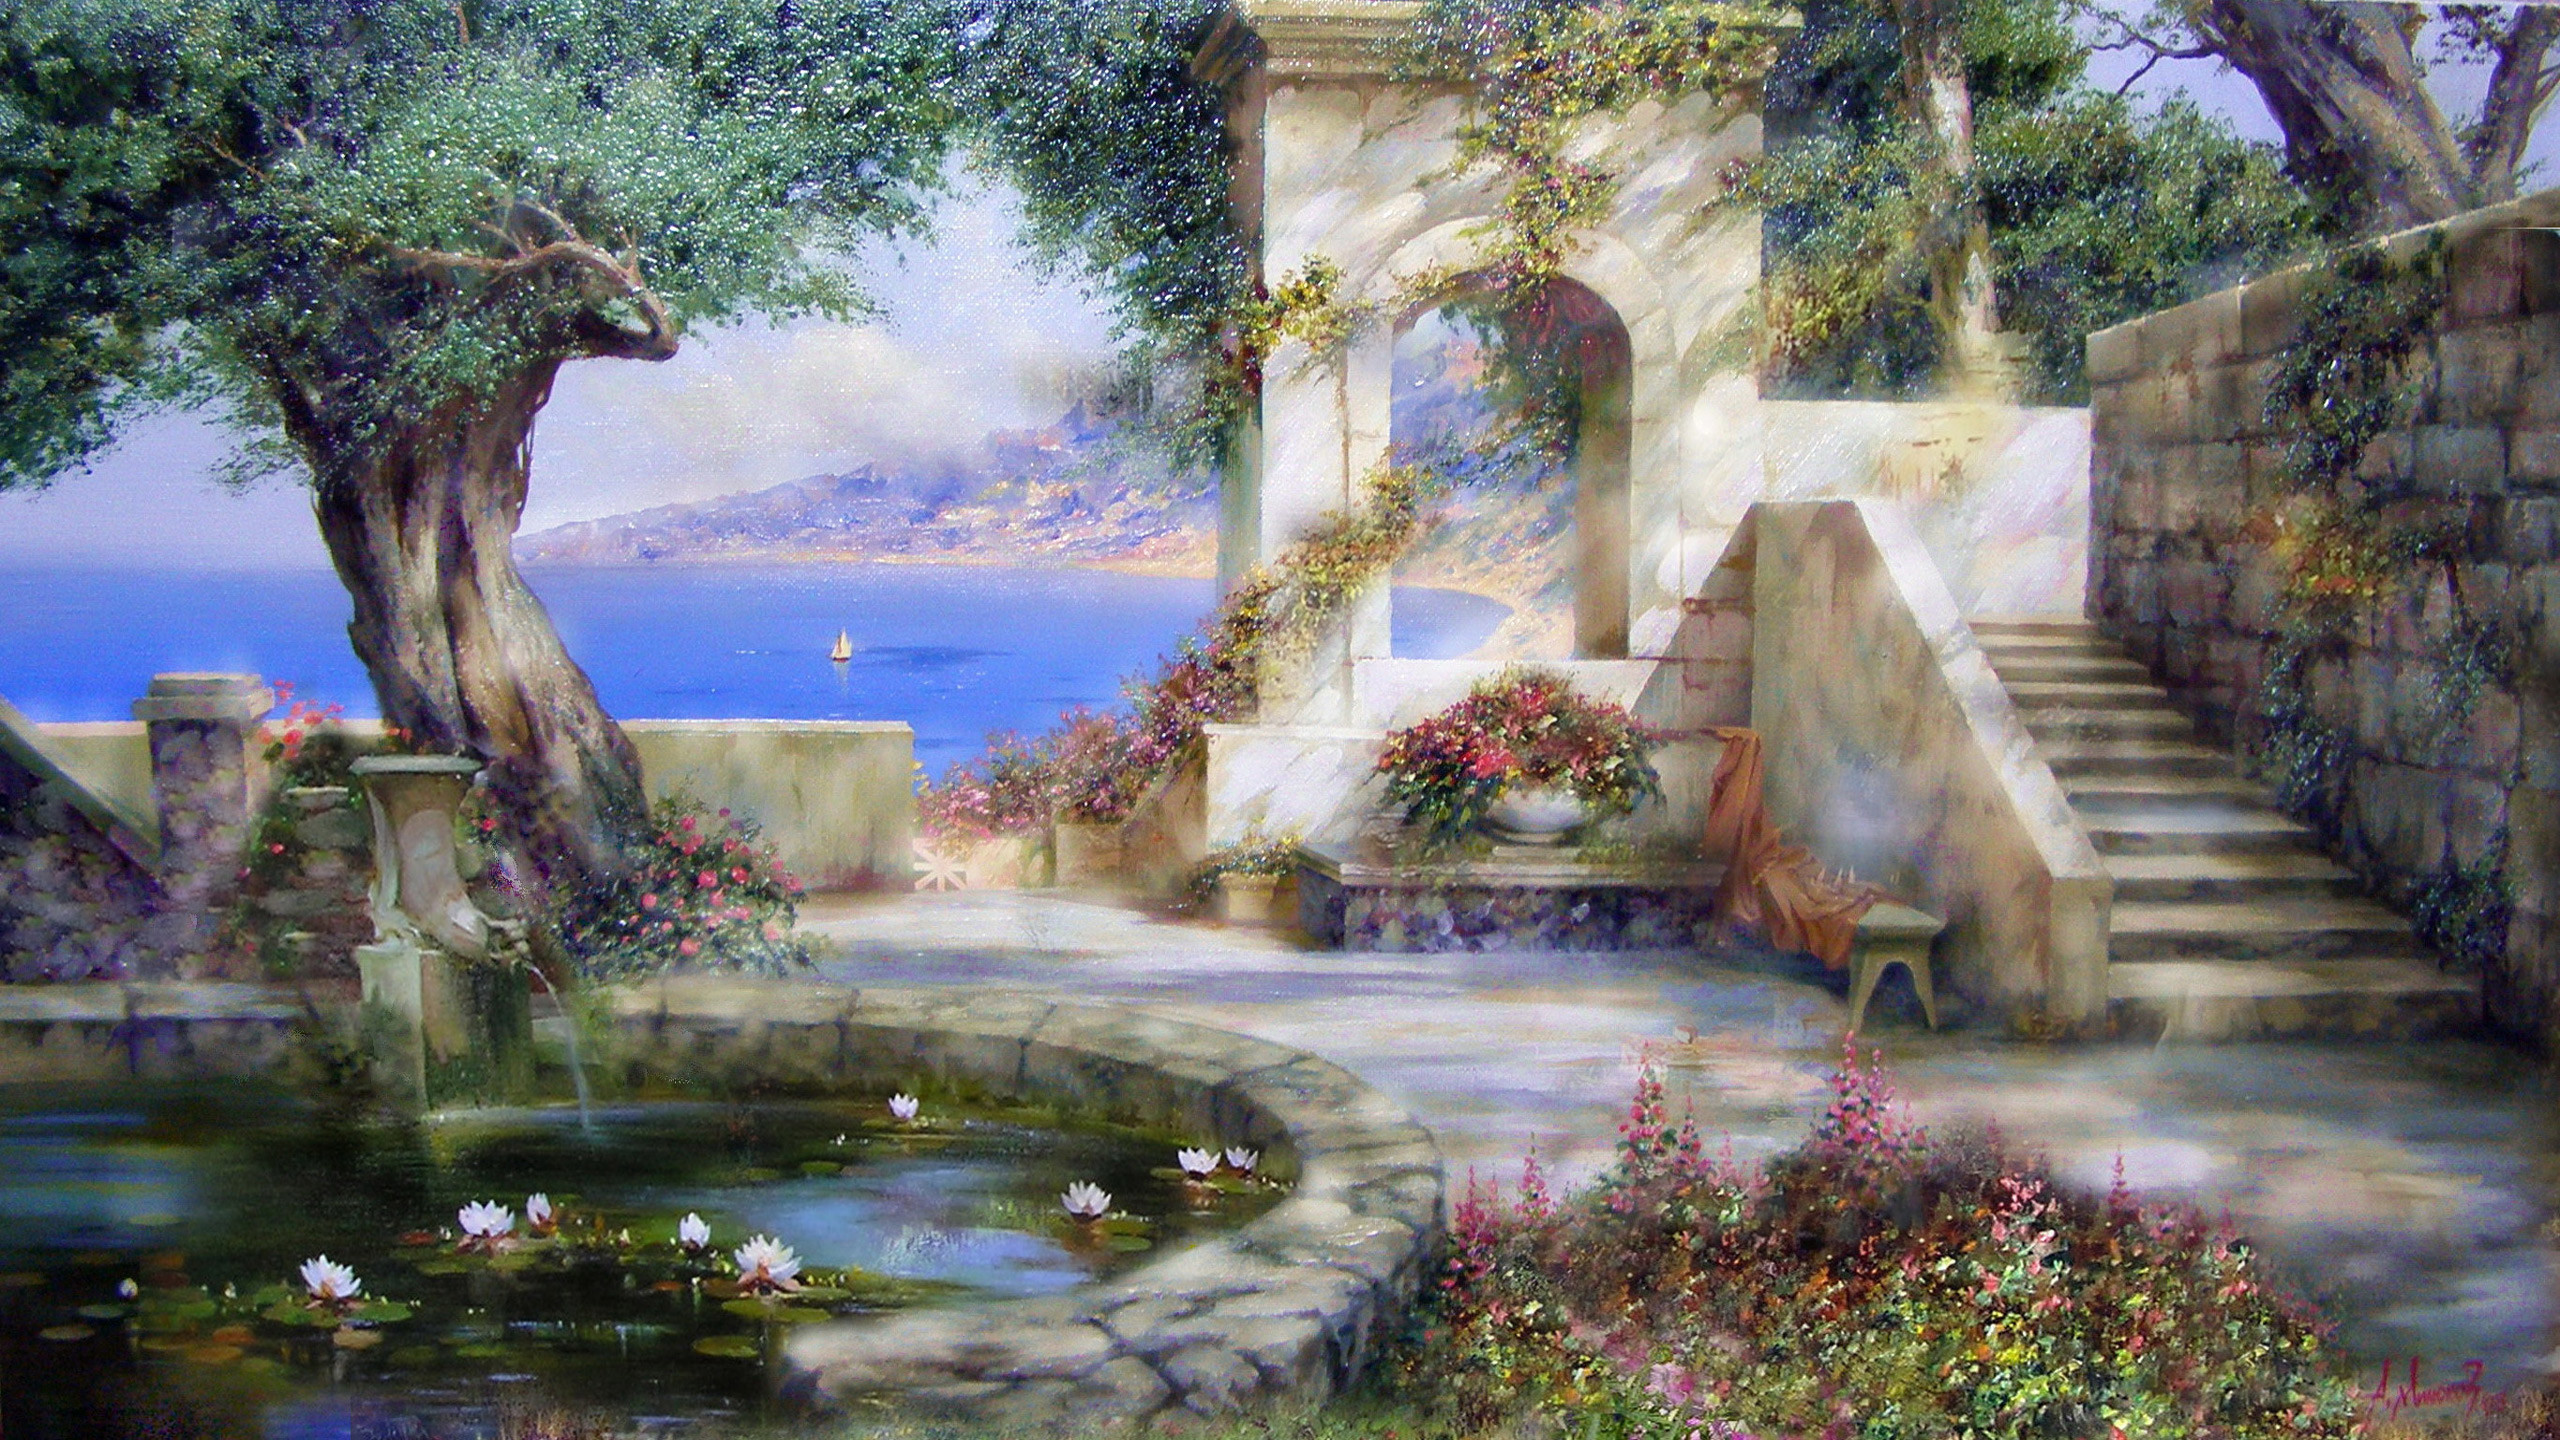 2560x1440 Free Landscape Painting Art, computer desktop hd wallpapers, pictures,  images